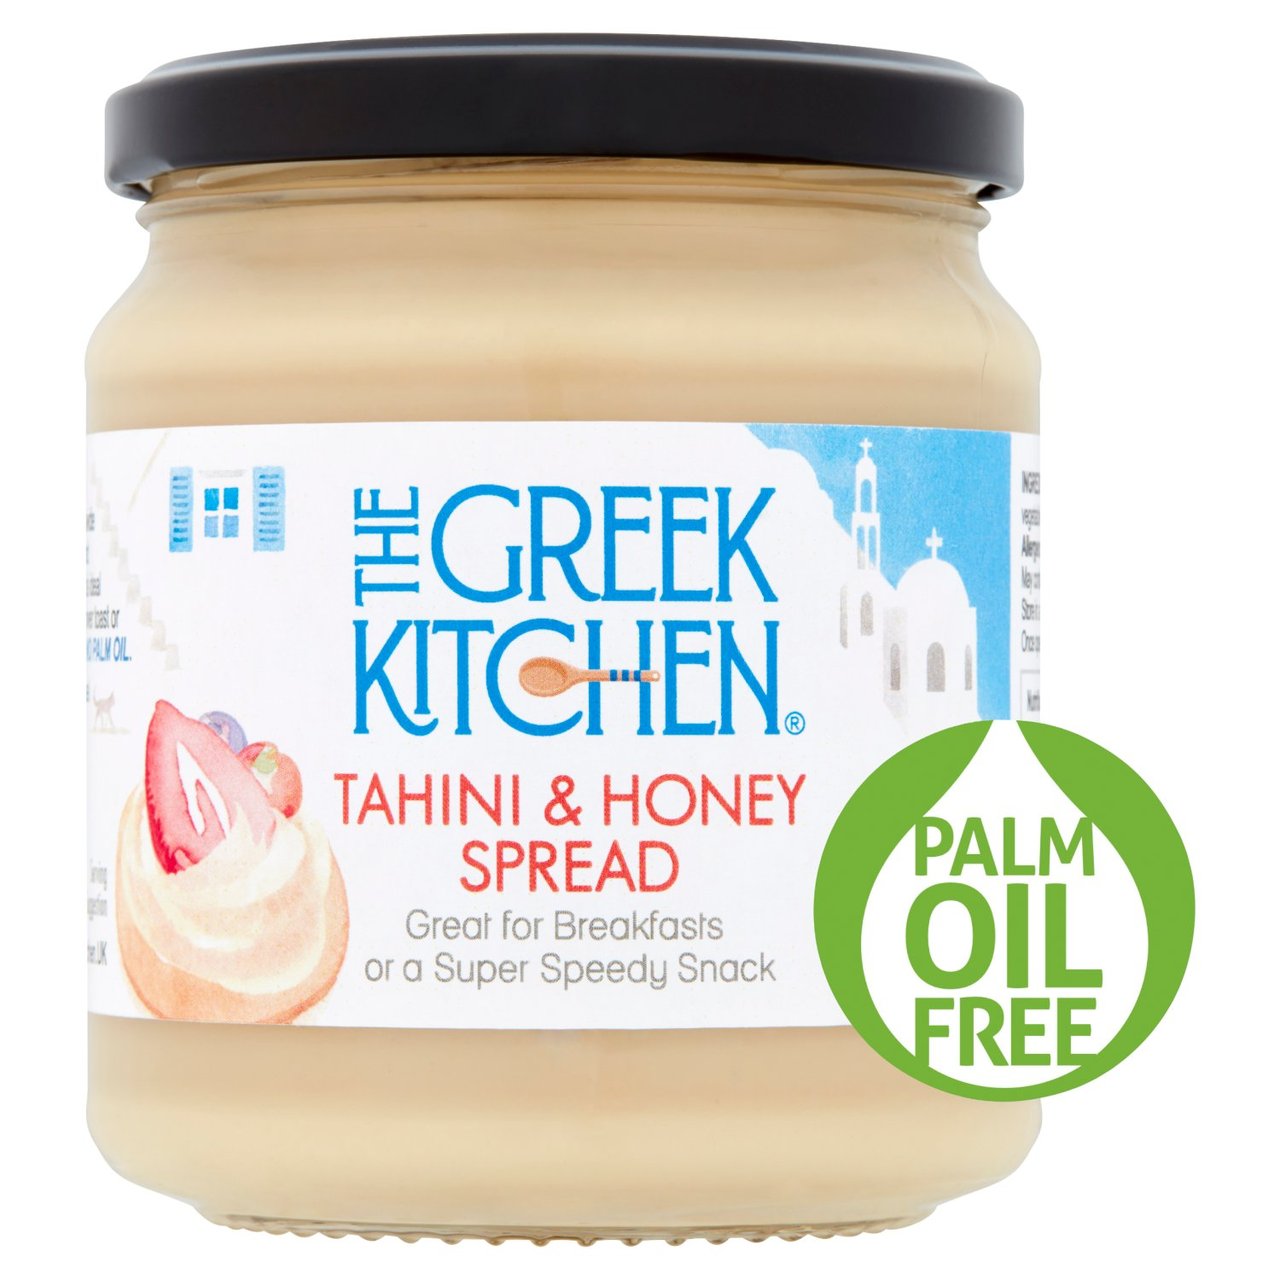 The Greek Kitchen Tahini & Honey Spread